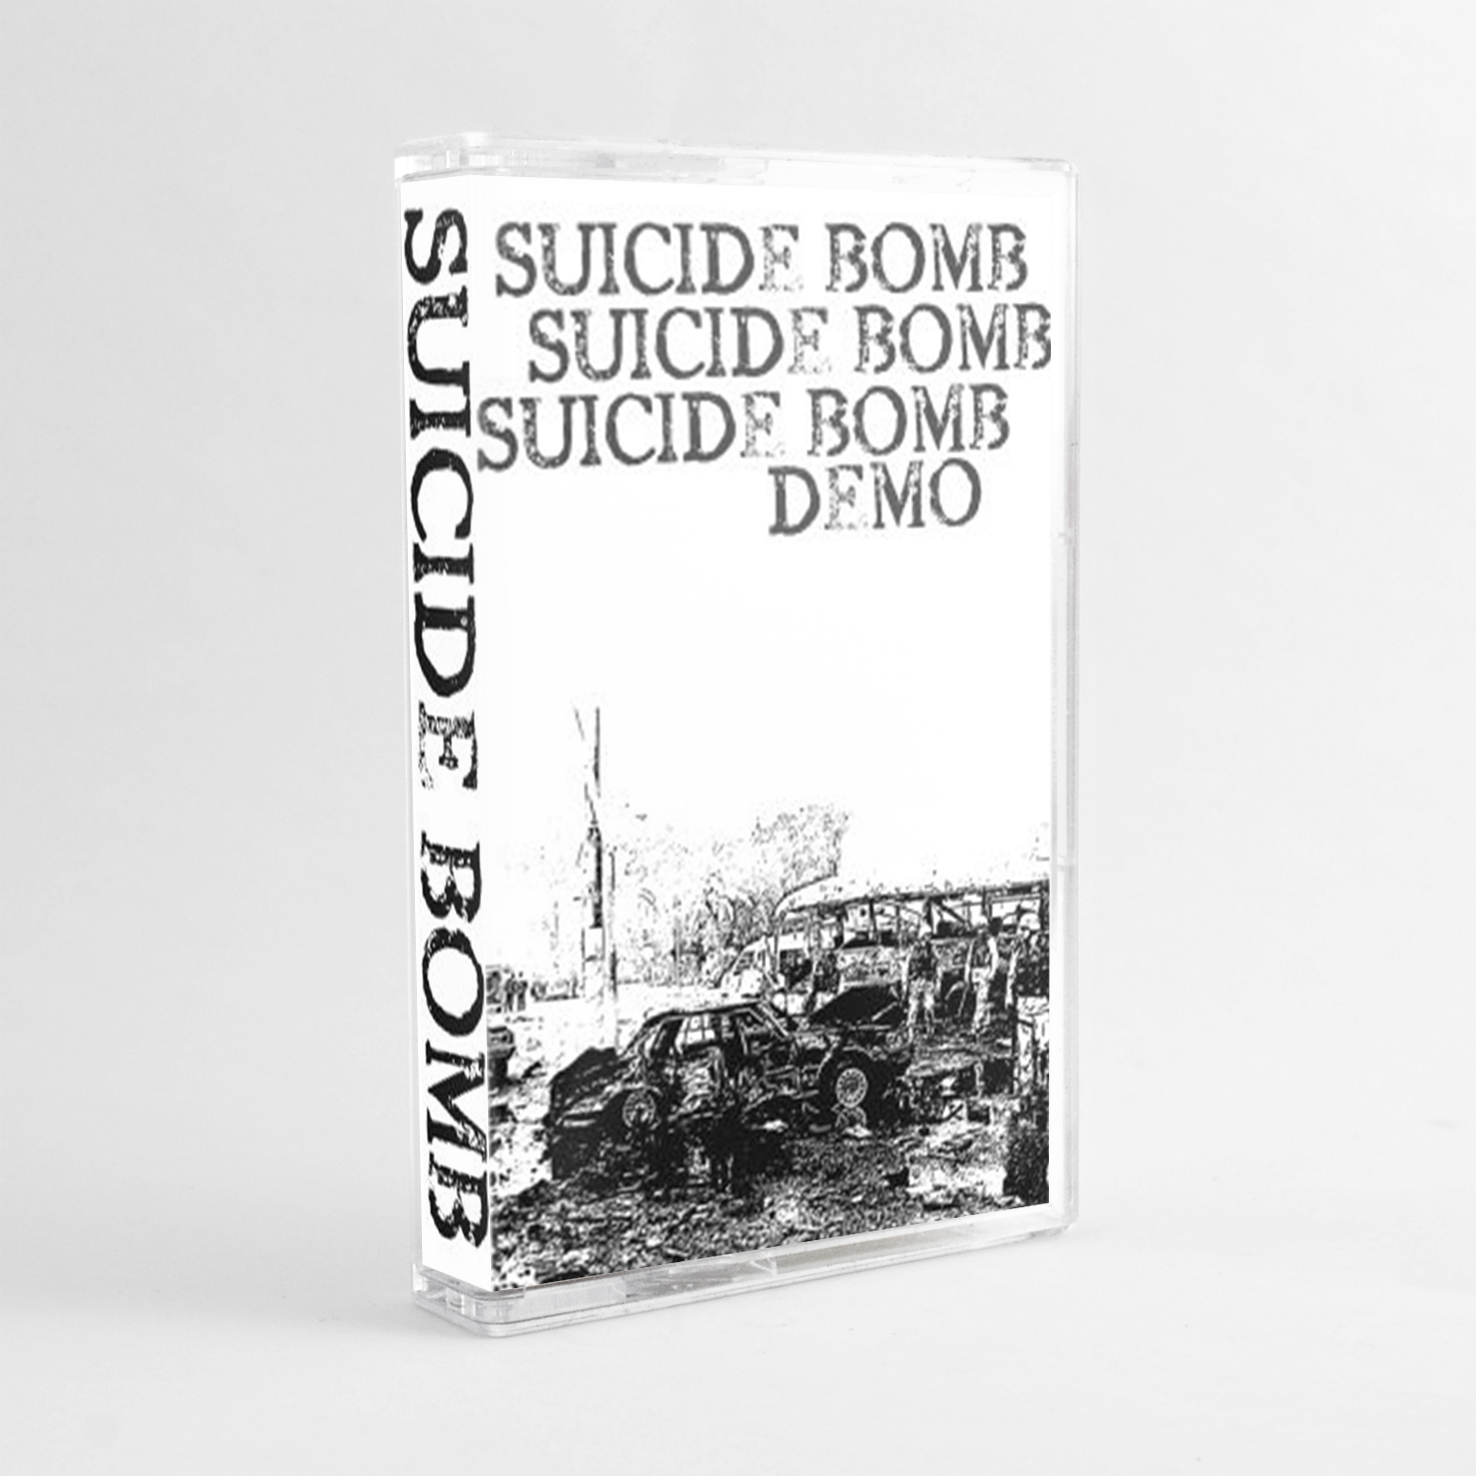 SUICIDE BOMB DEMO